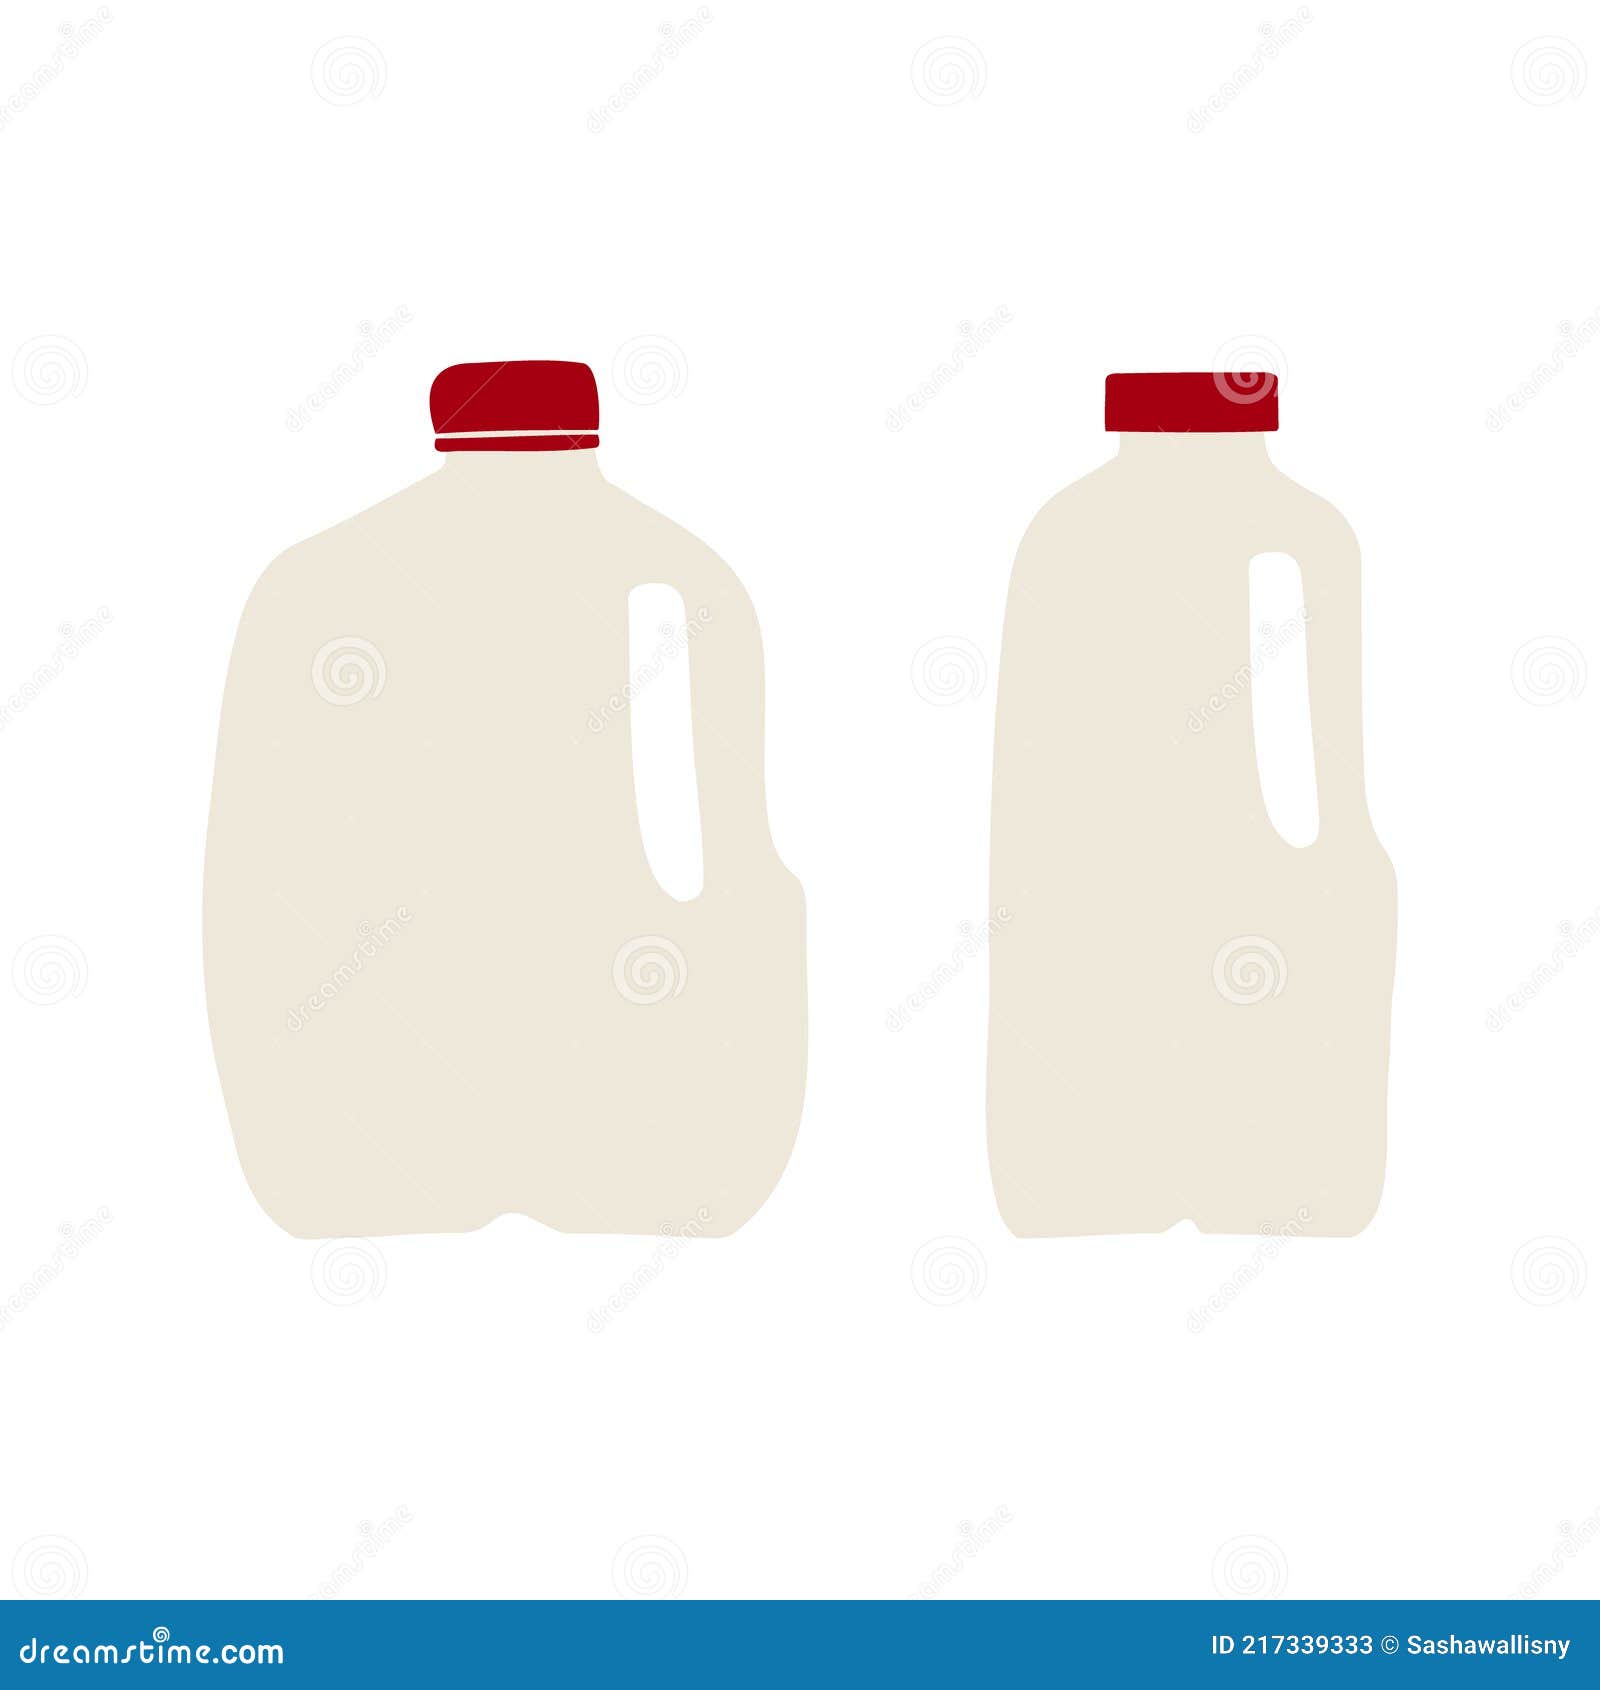 https://thumbs.dreamstime.com/z/hand-drawn-flat-vector-illustration-milk-plastic-gallon-half-gallon-jug-red-cap-isolated-white-background-hand-217339333.jpg